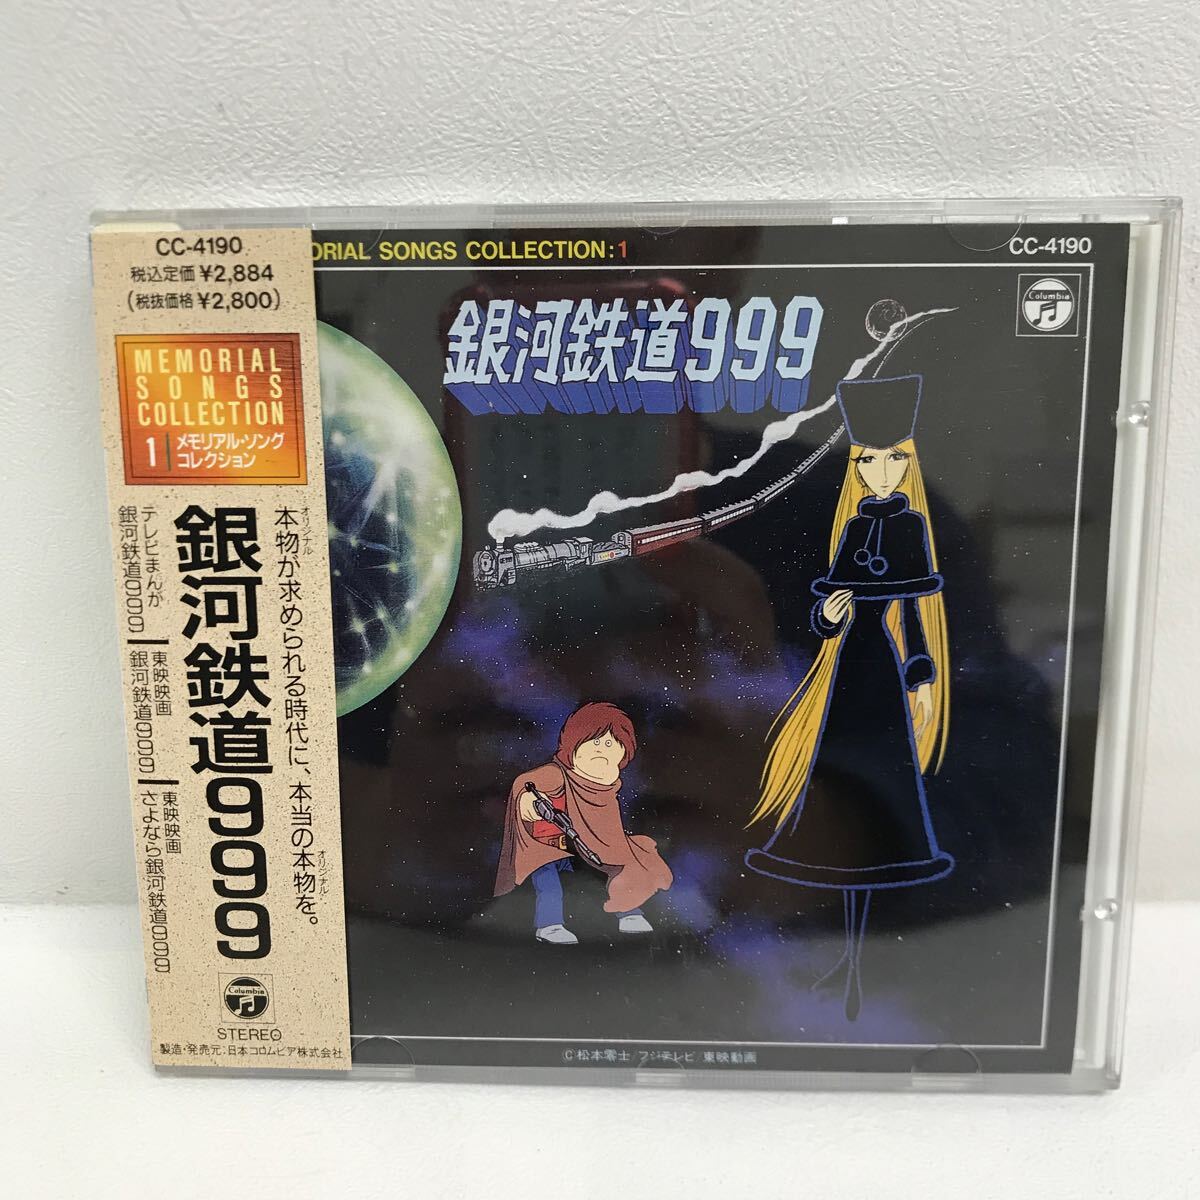 I0504A3 Ginga Tetsudou 999 CD music anime anime song obi attaching memorial *song collection ko rom Via COLUMBIA...... other 